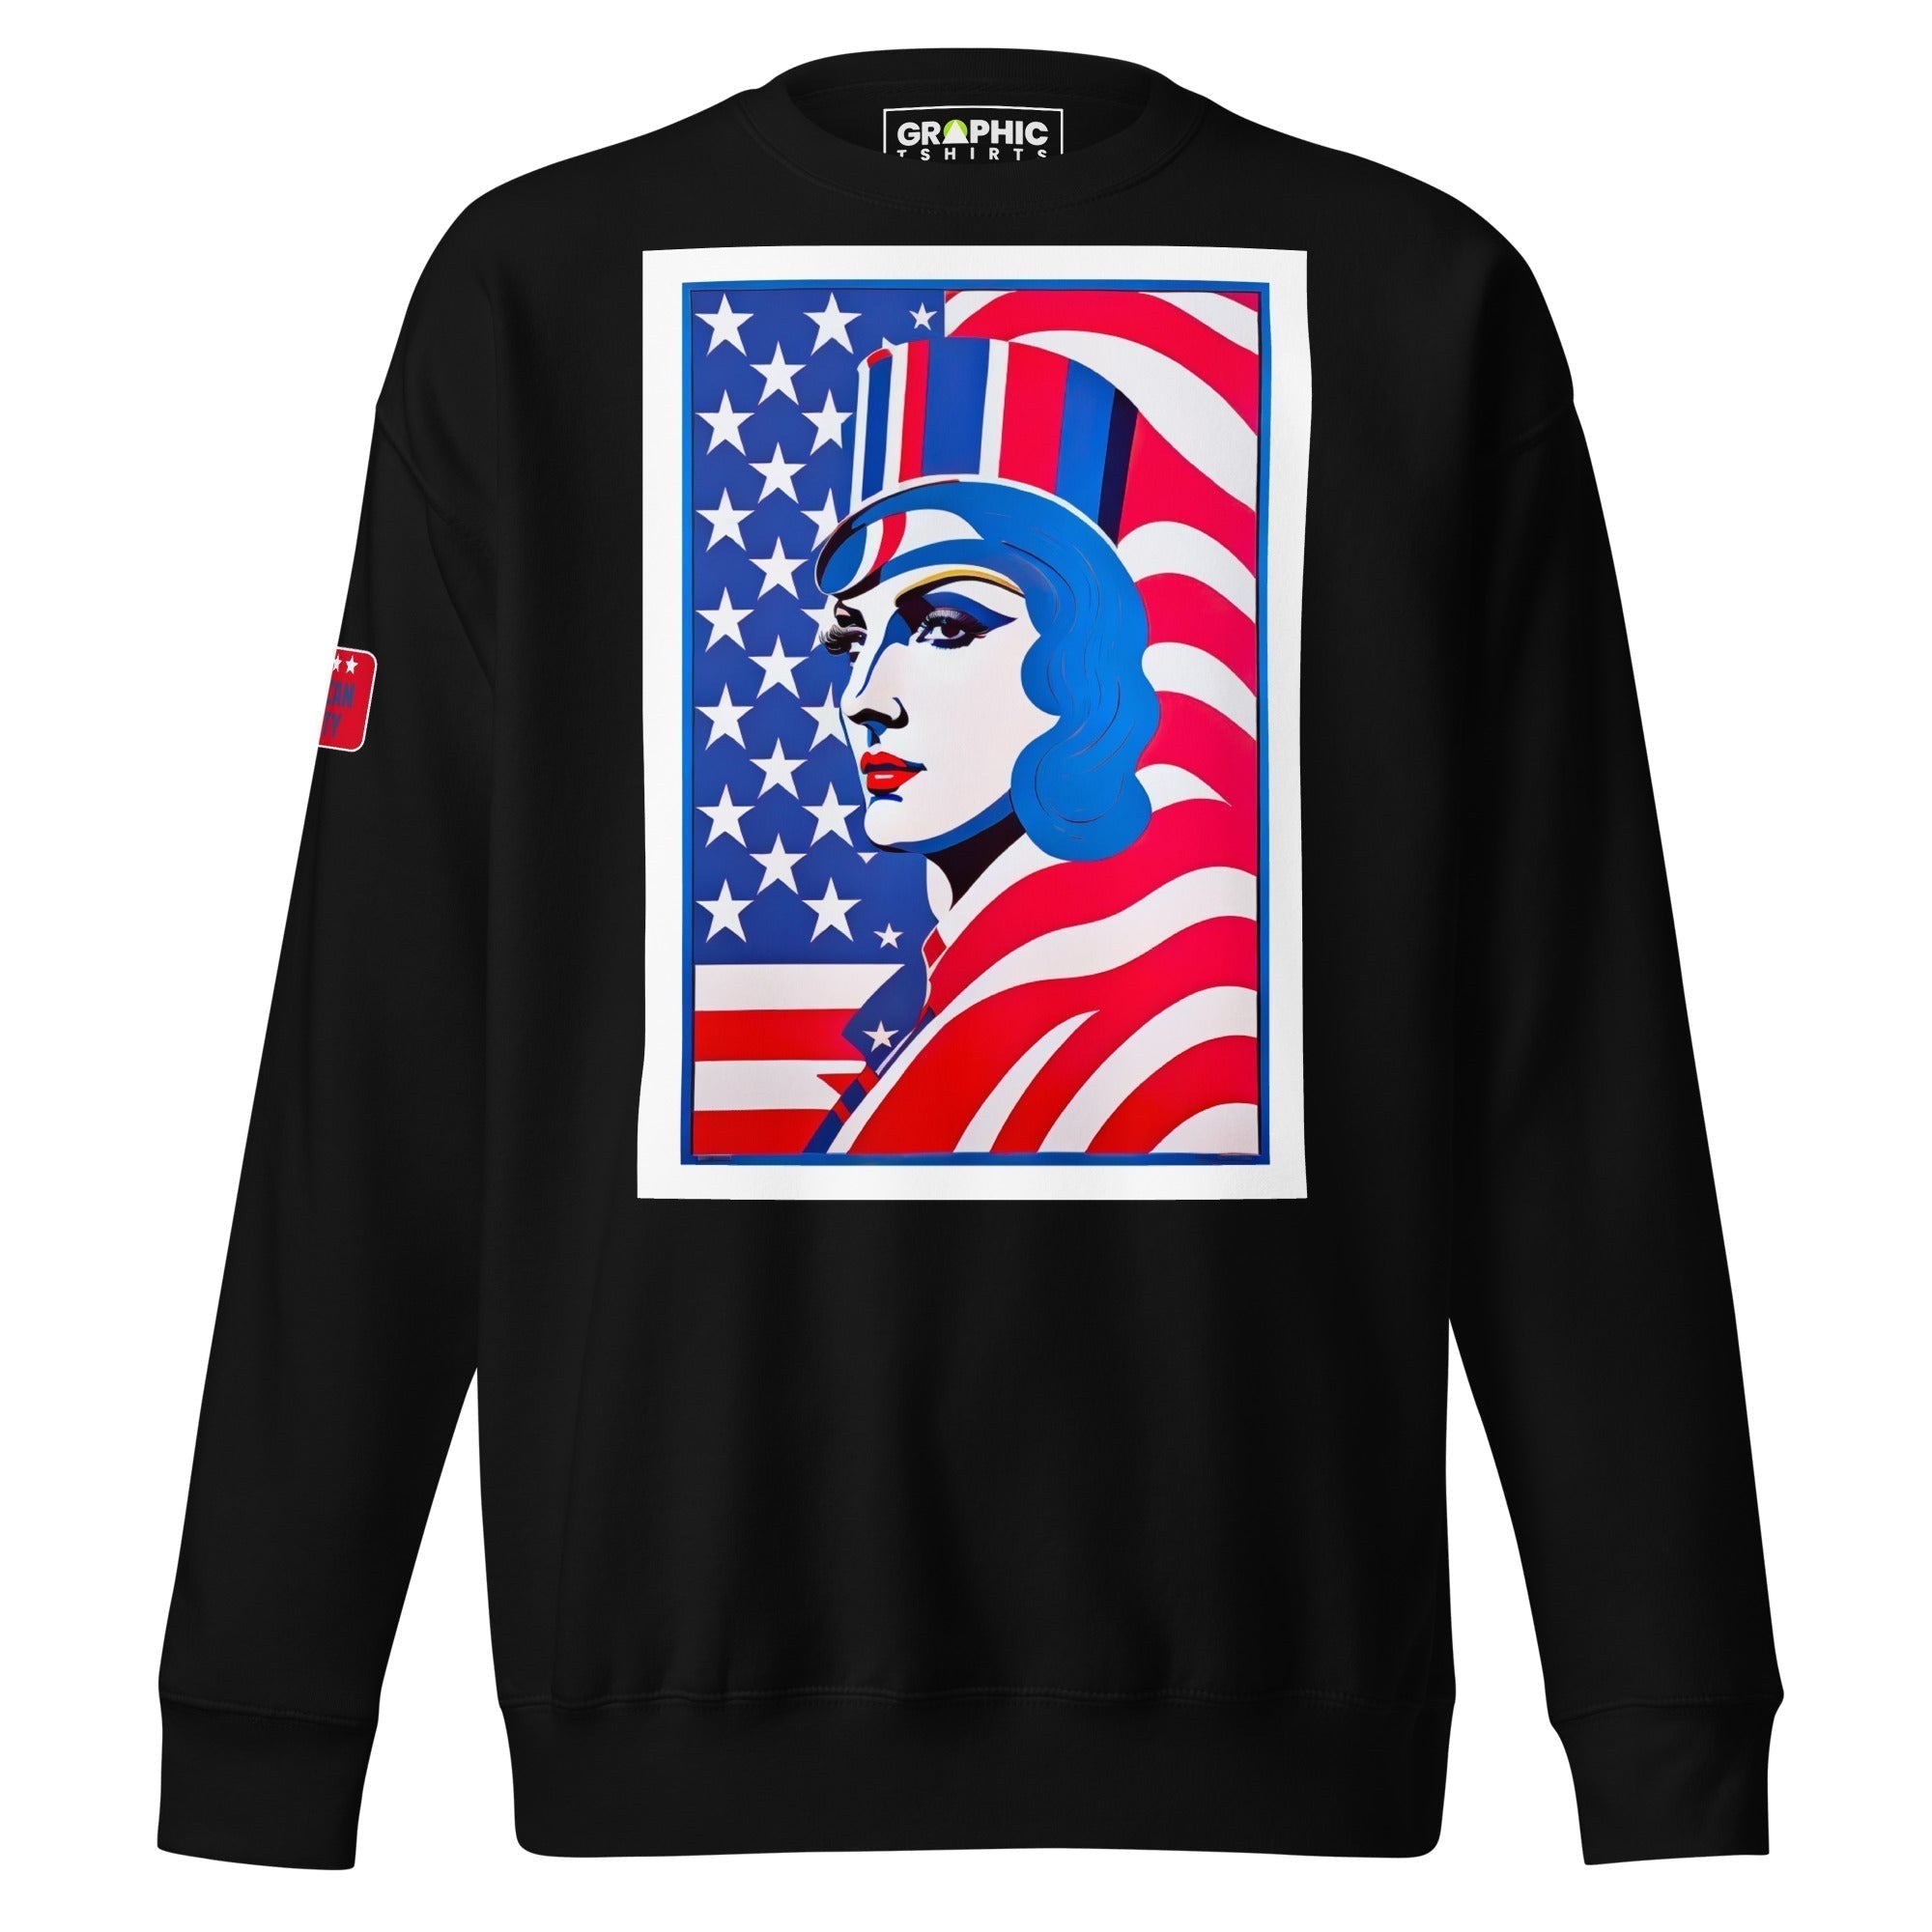 Unisex Premium Sweatshirt - American Liberty Series v.9 - GRAPHIC T-SHIRTS